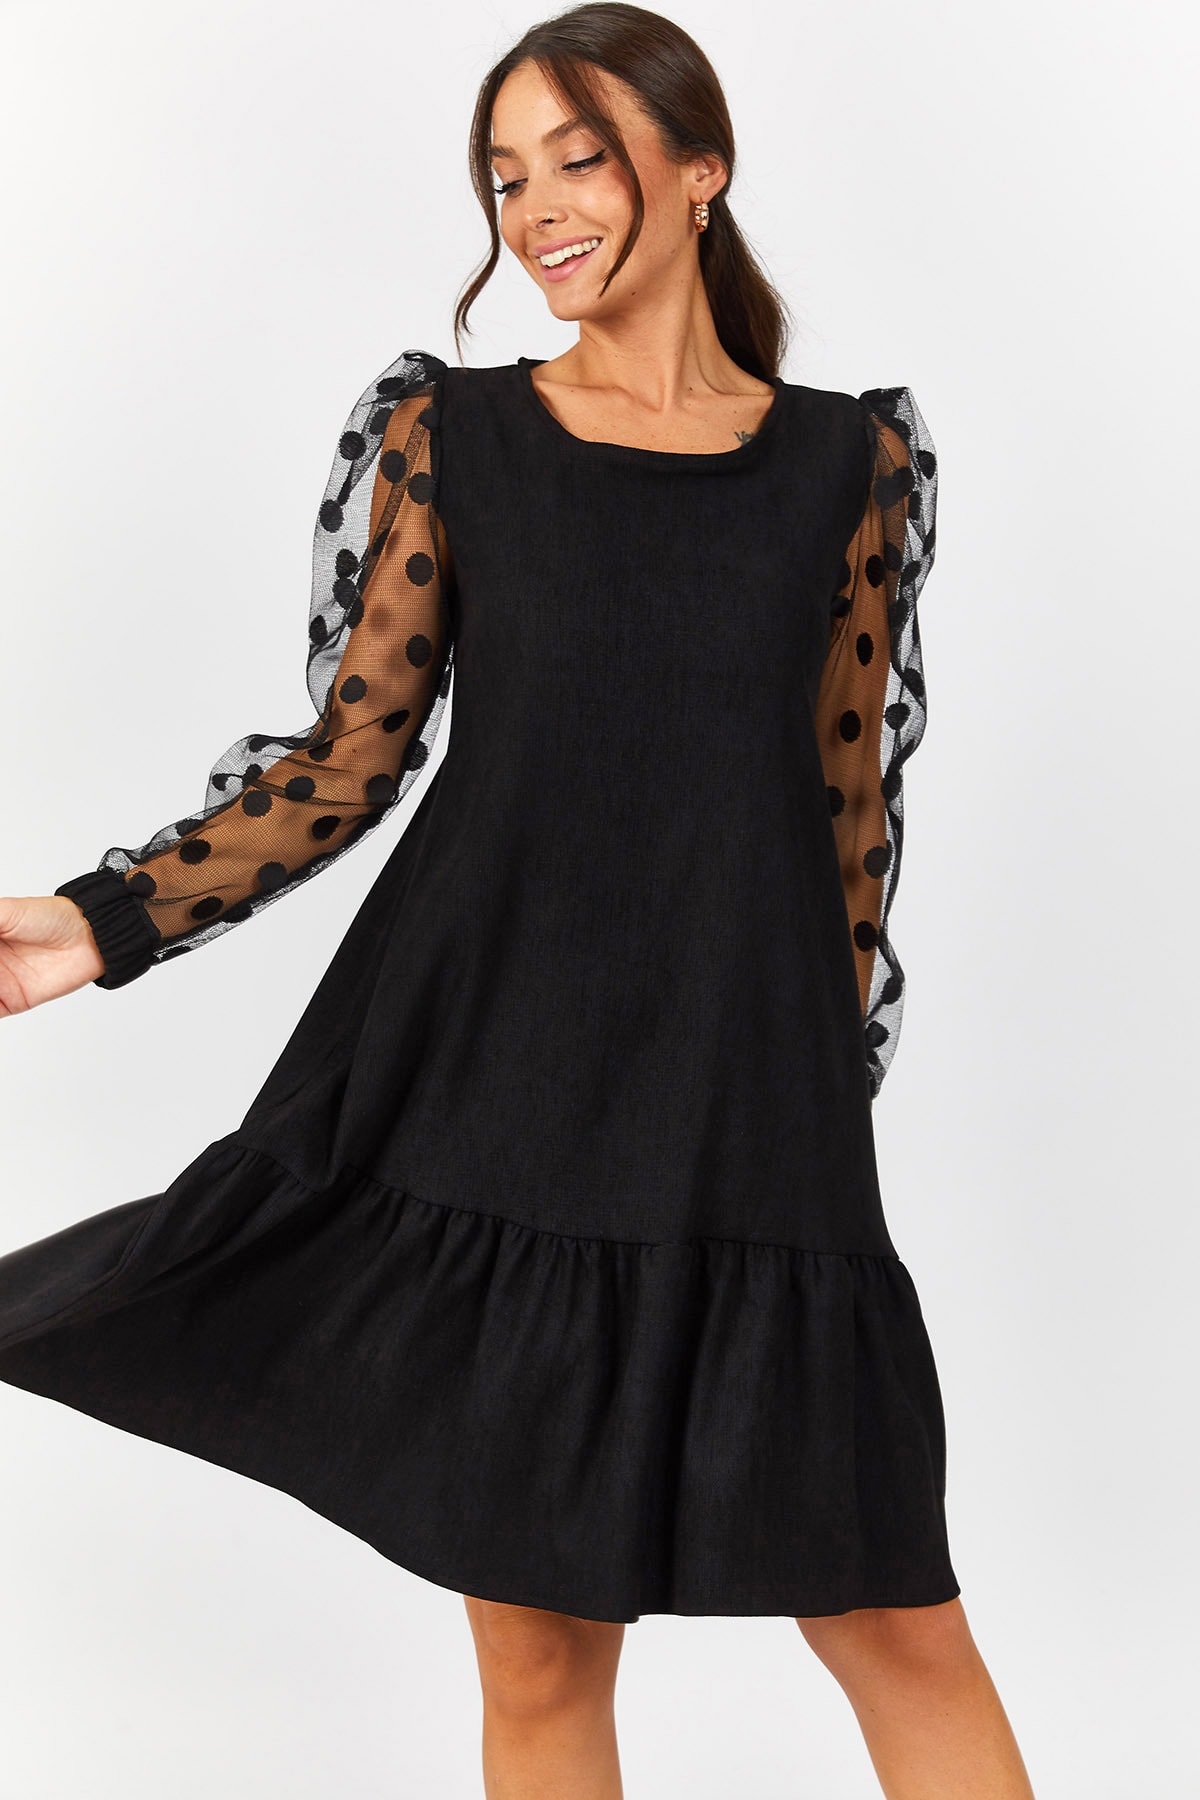 Armonika Women's Black Sleeve Tulle Six Ruffled Dress